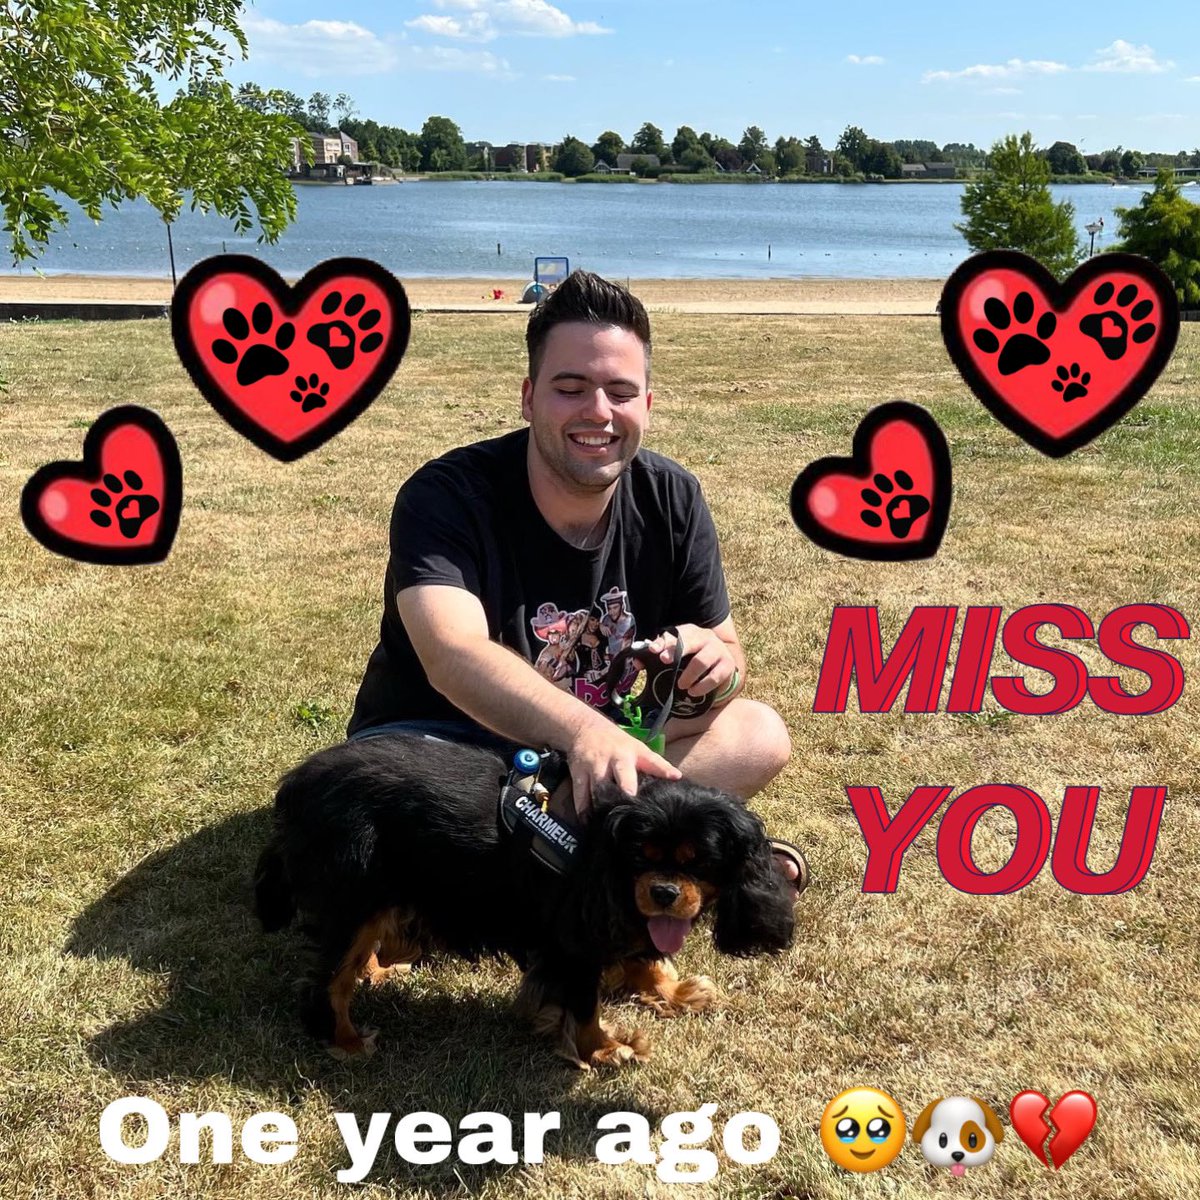 1 jaar geleden, we missen je lieve Gijs! 🥹🐶💔 #oneyearagotoday #dogmemories #missyou #foreverinourhearts #memorieslastforever #but #missyousomuch #bestdogever #liefstehond